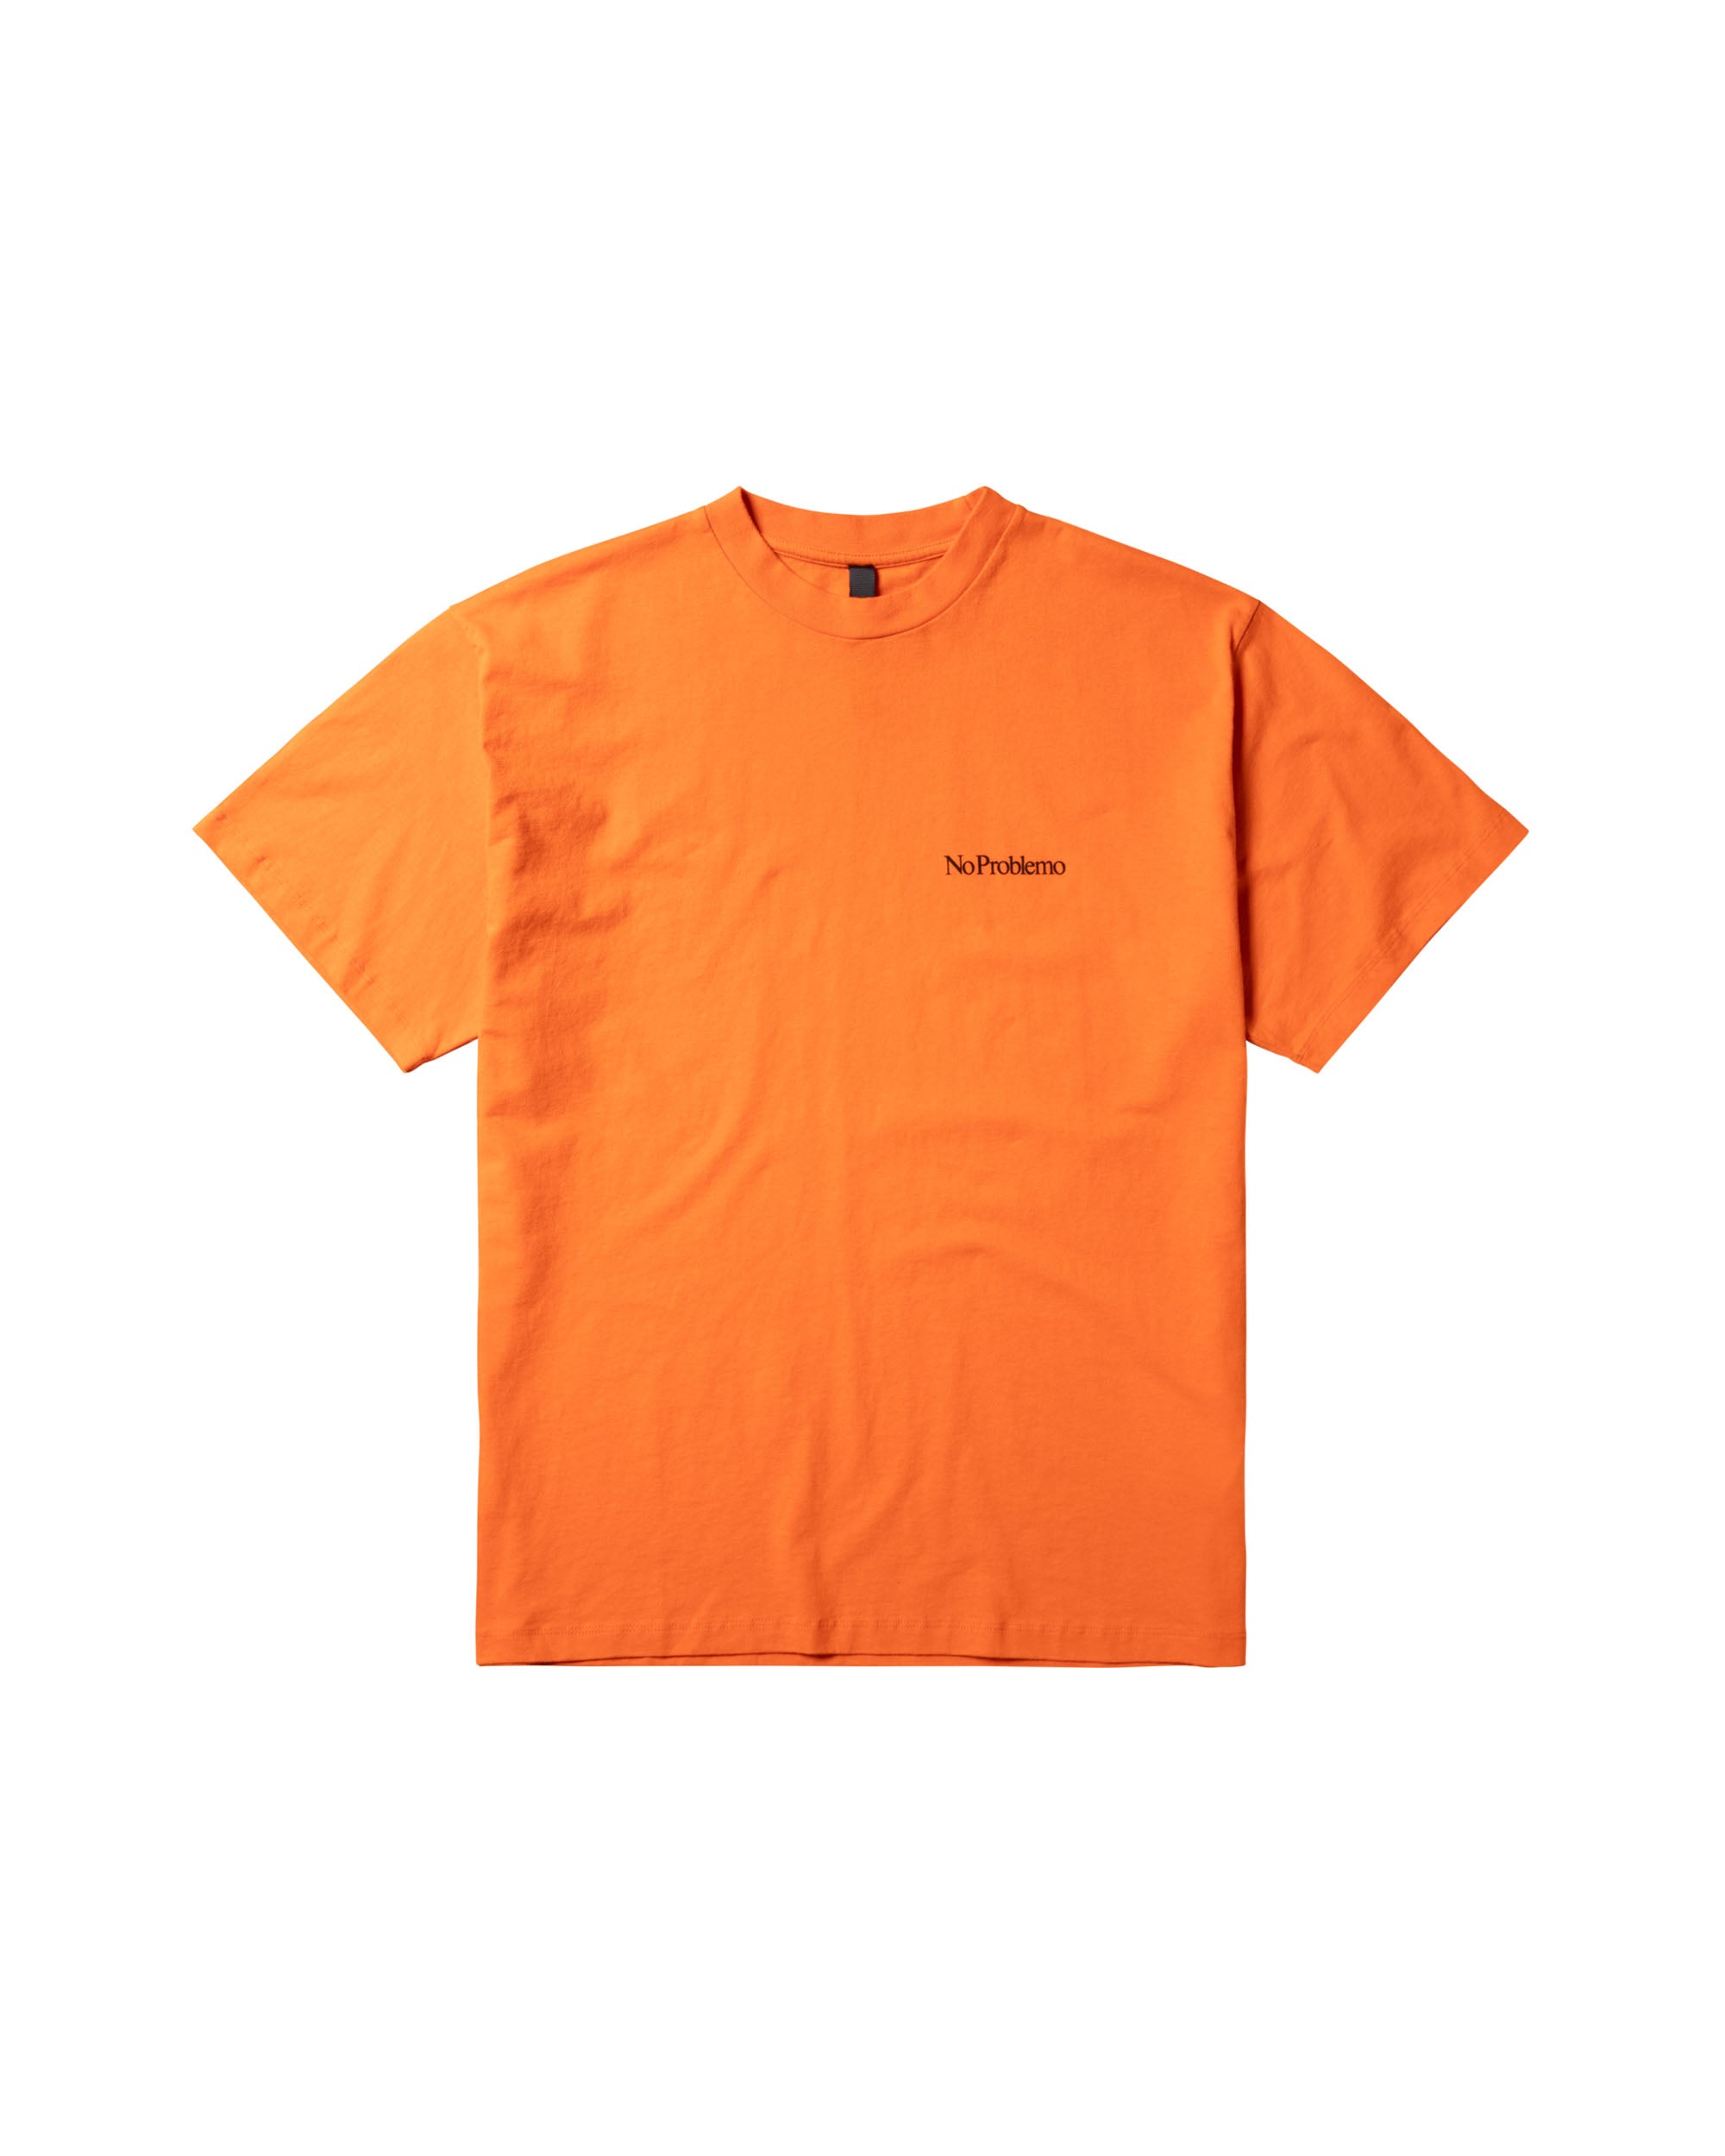 Mini Problemo T-shirt - Orange